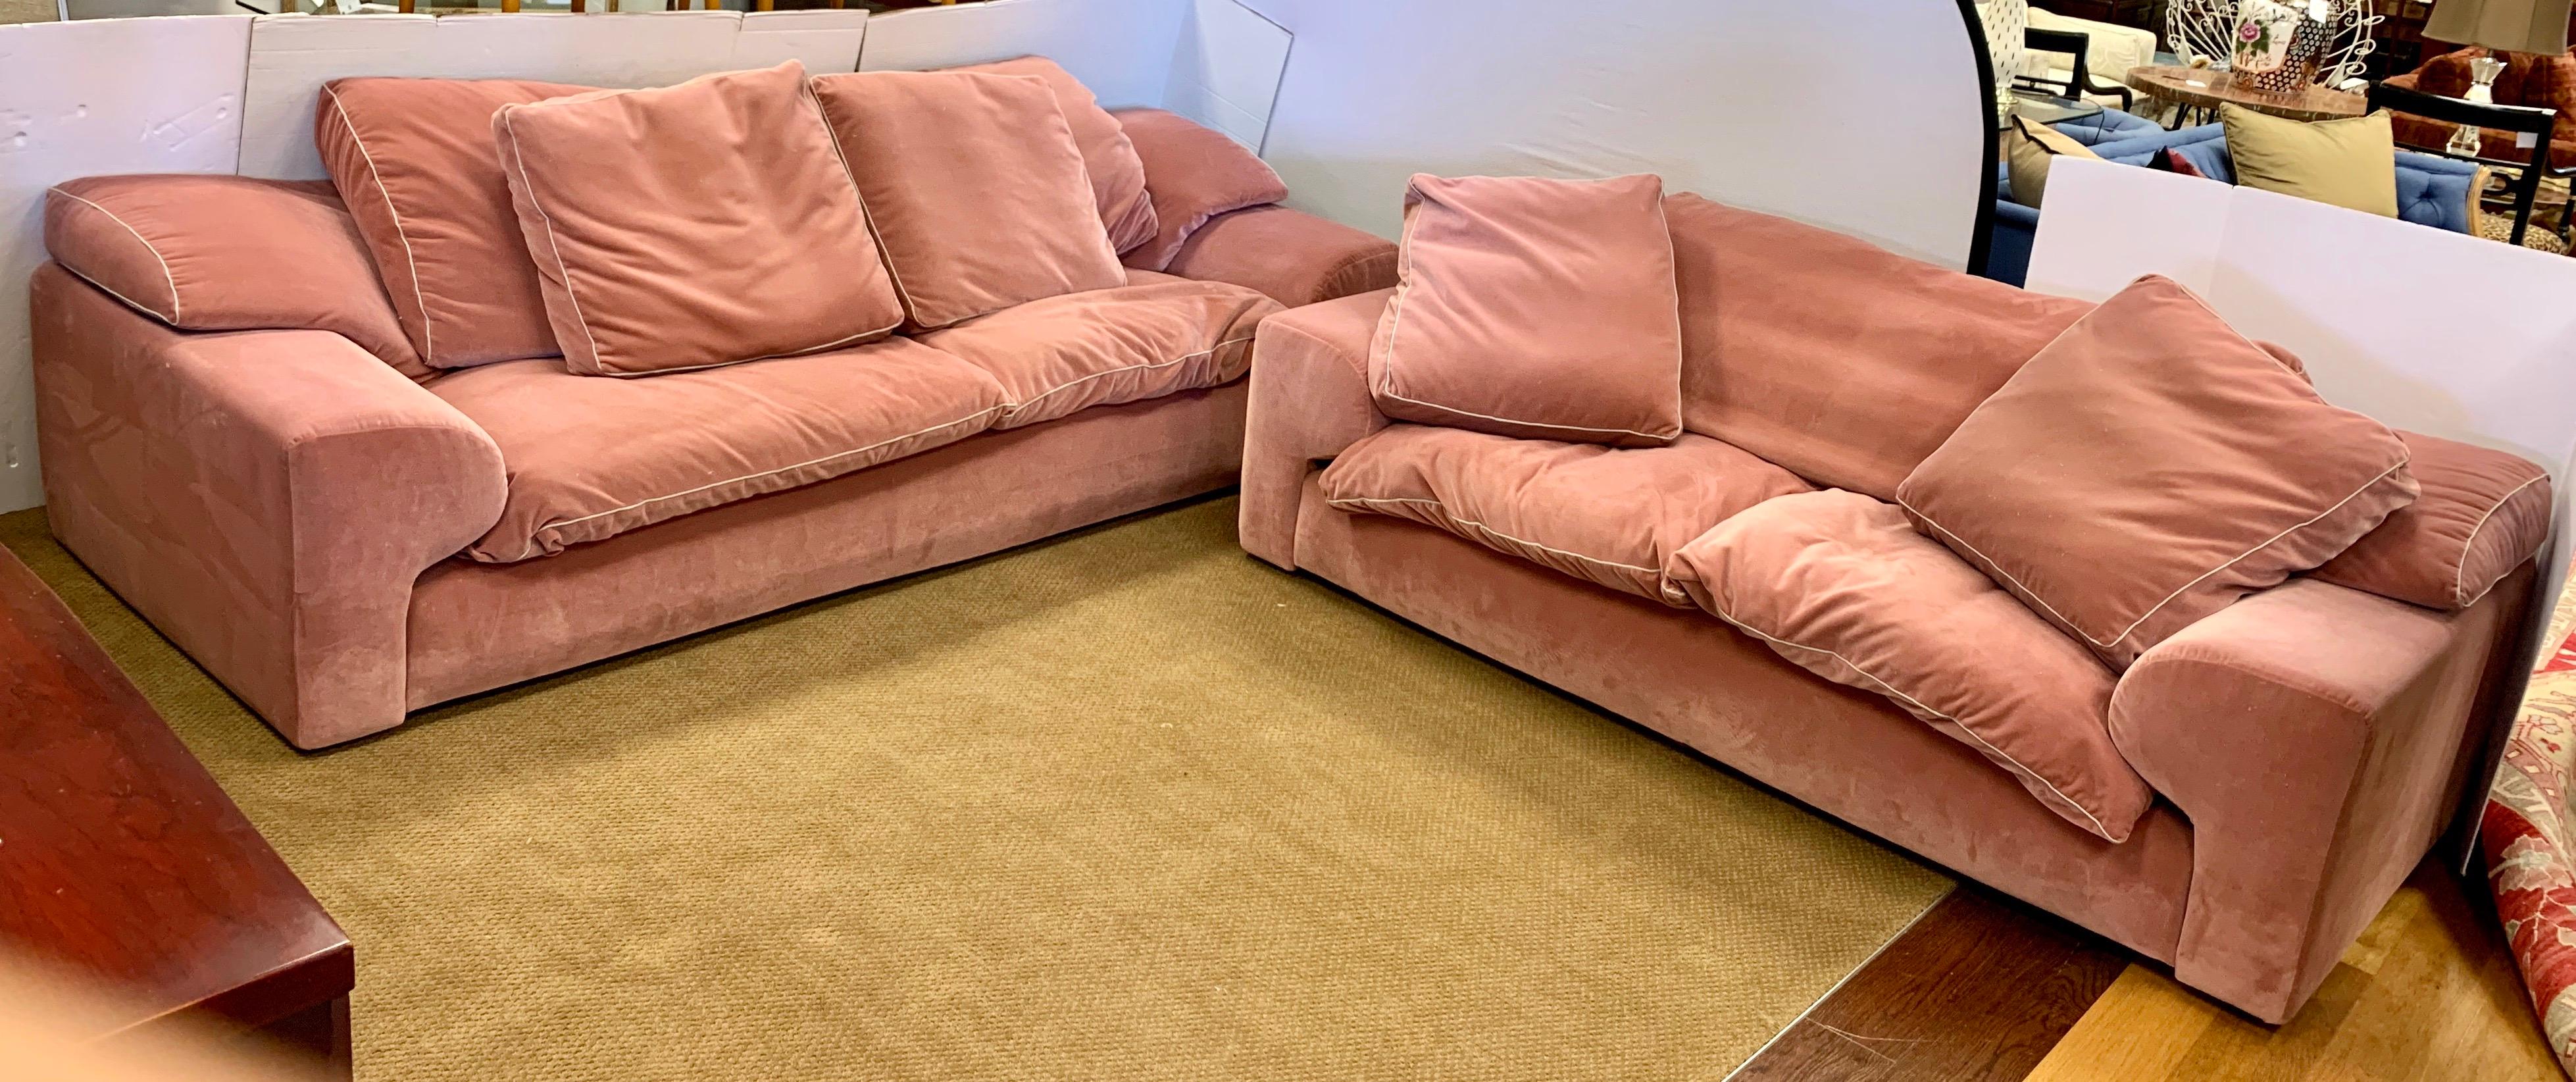 pale pink sofa